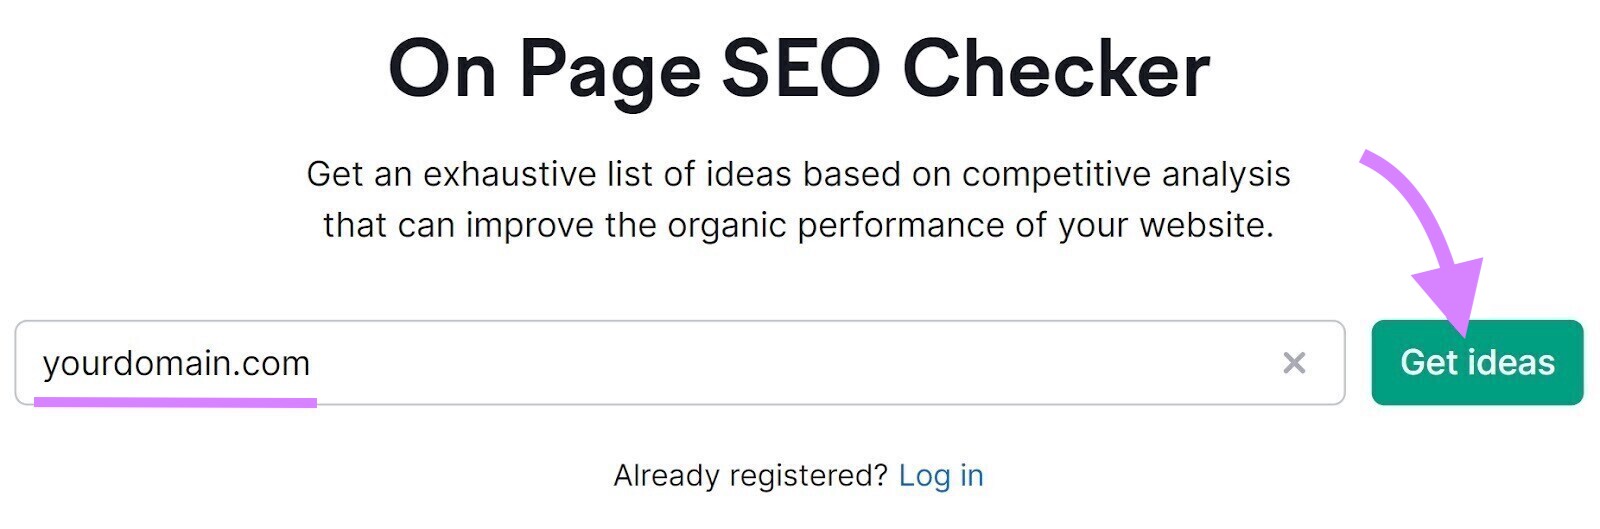 On Page SEO Checker search bar